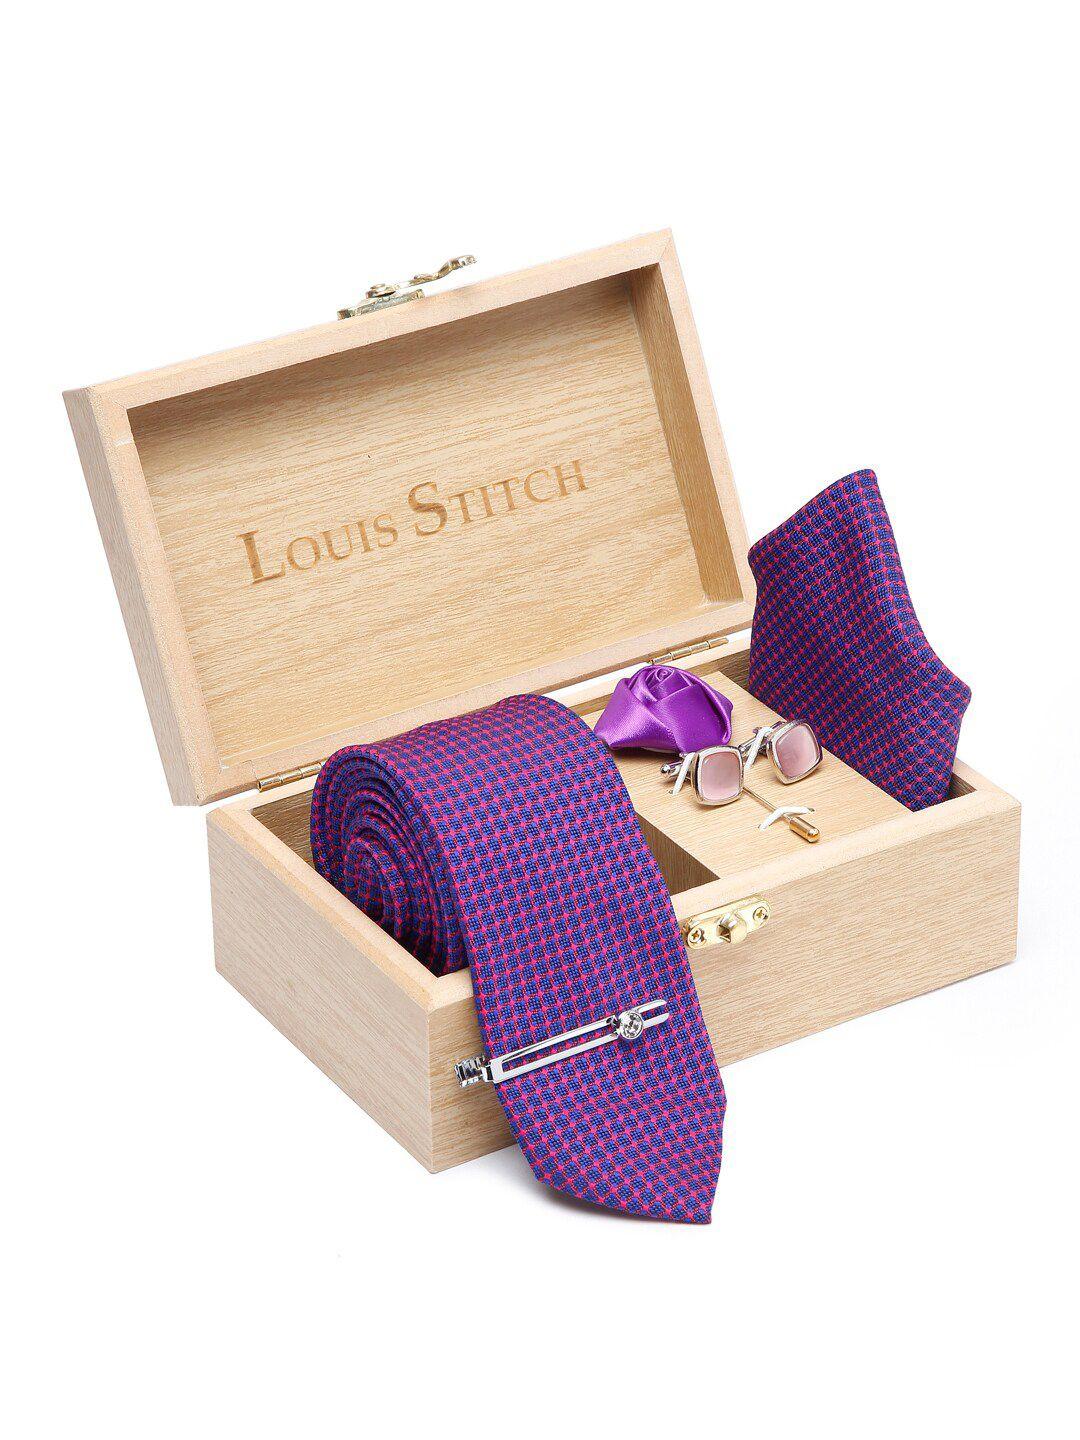 louis stitch printed italian silk necktie accessory gift set